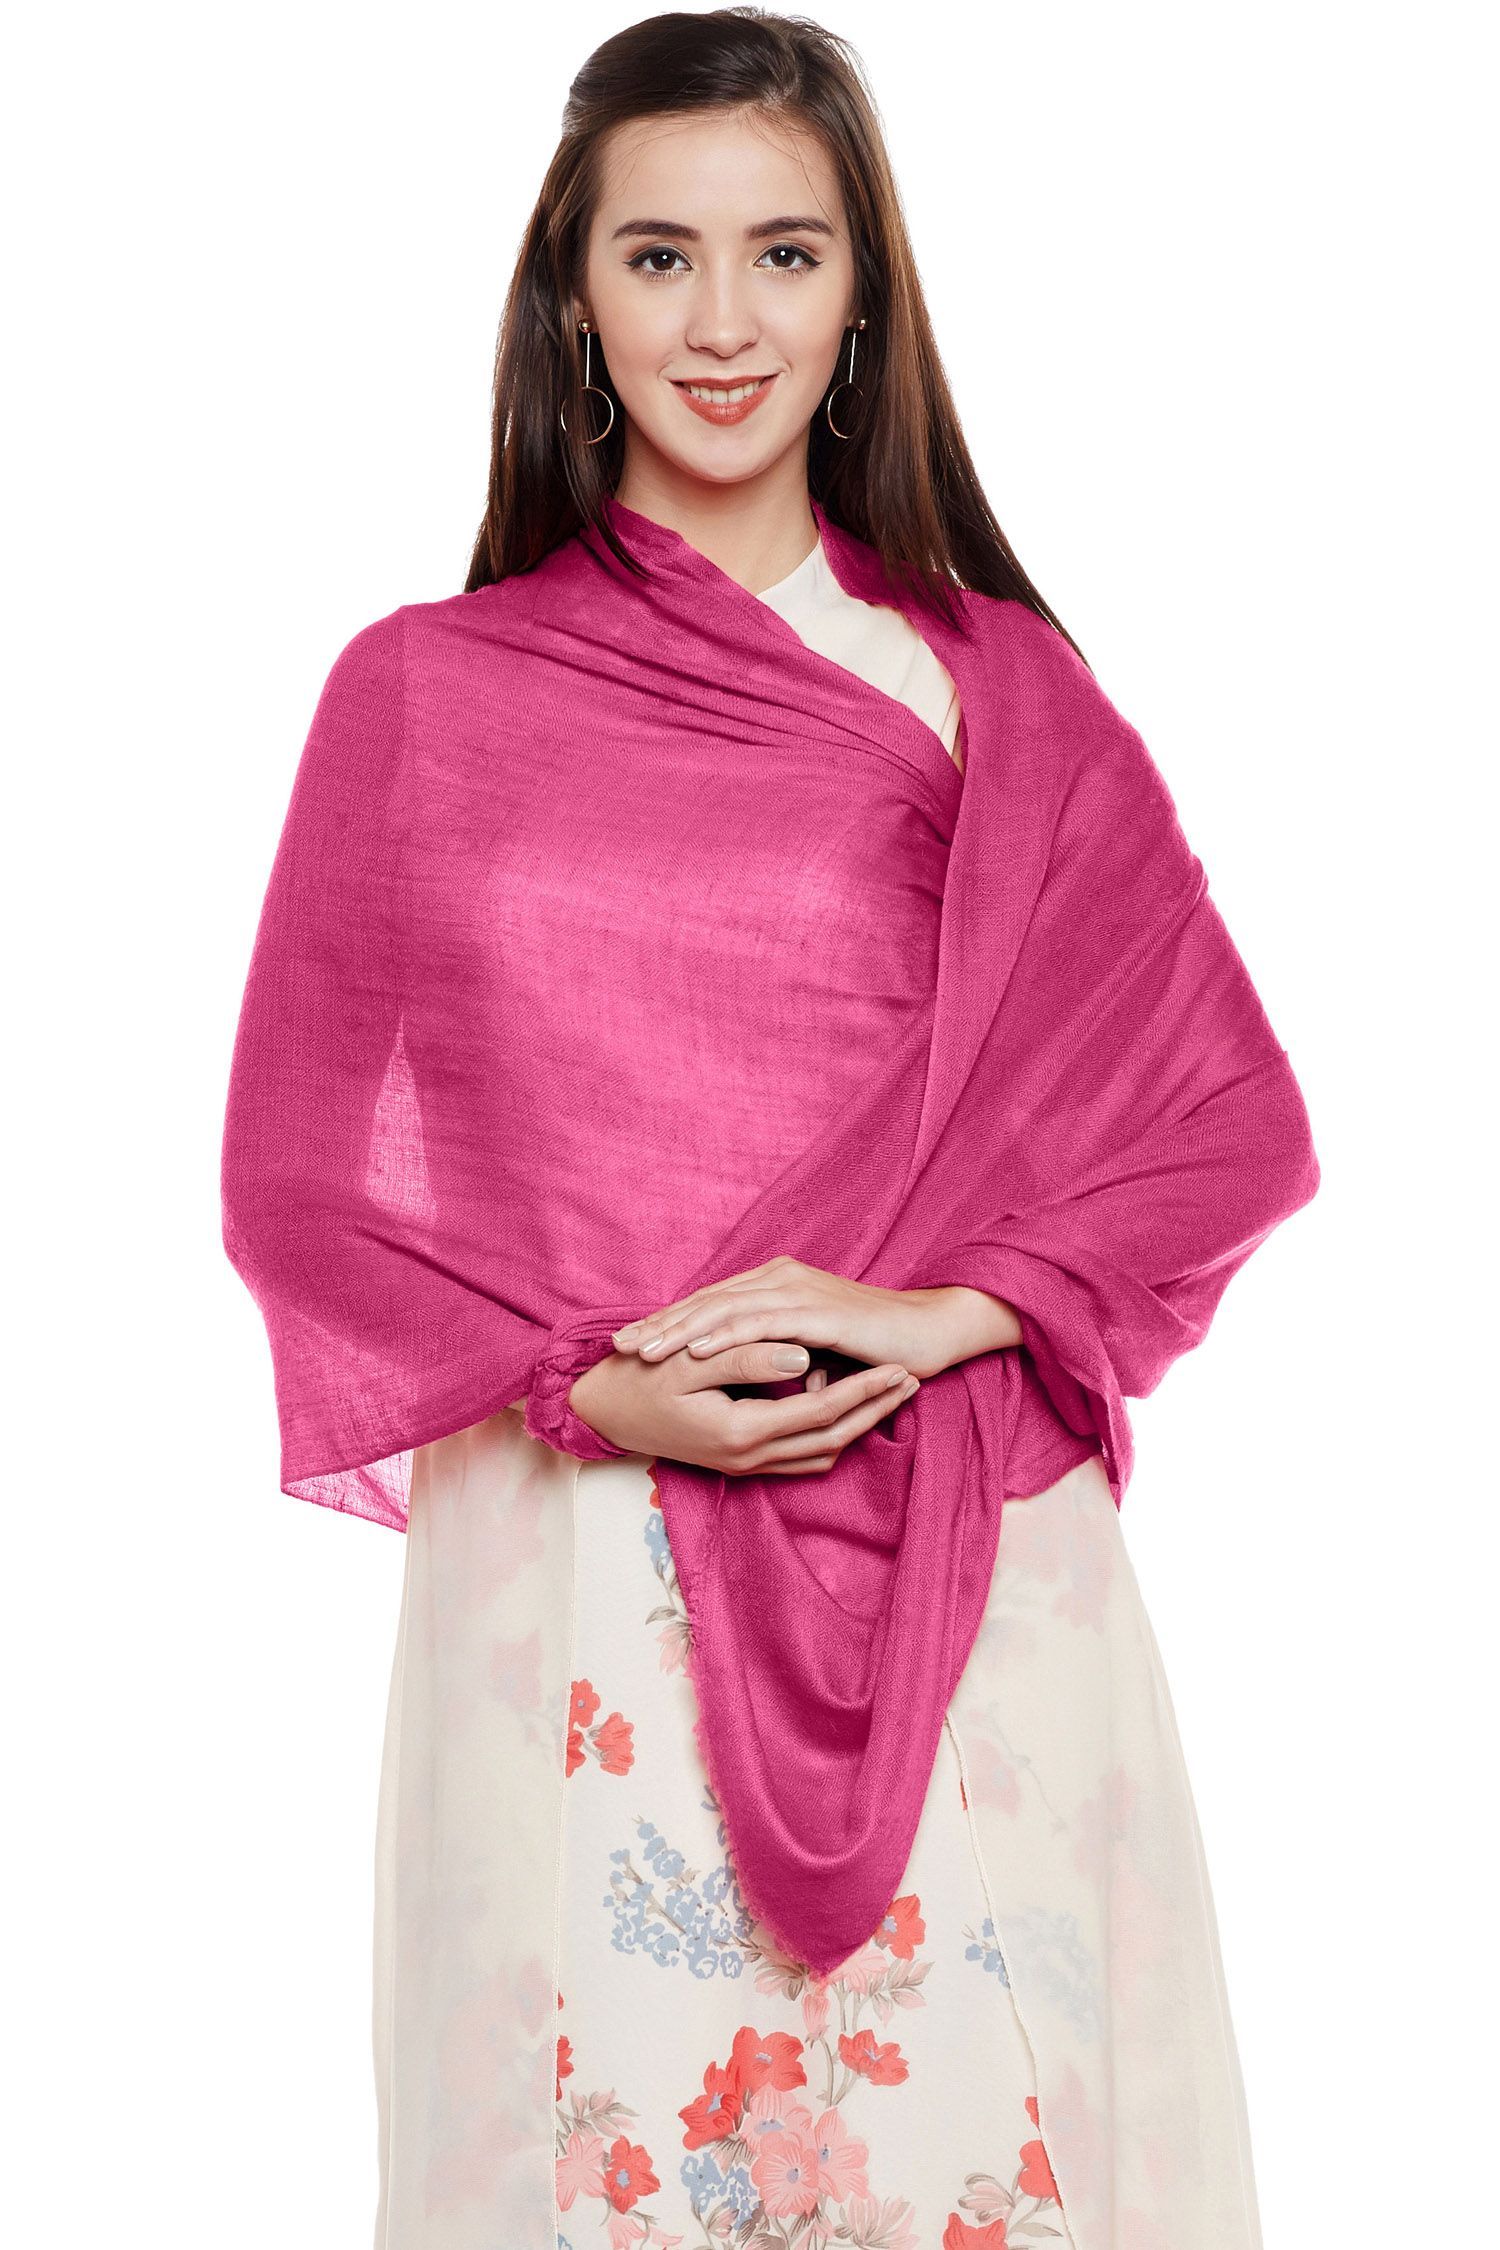 Buy Authentic Pink Cashmere Wrap | Pure Pashmina - 100% Cashmere Online